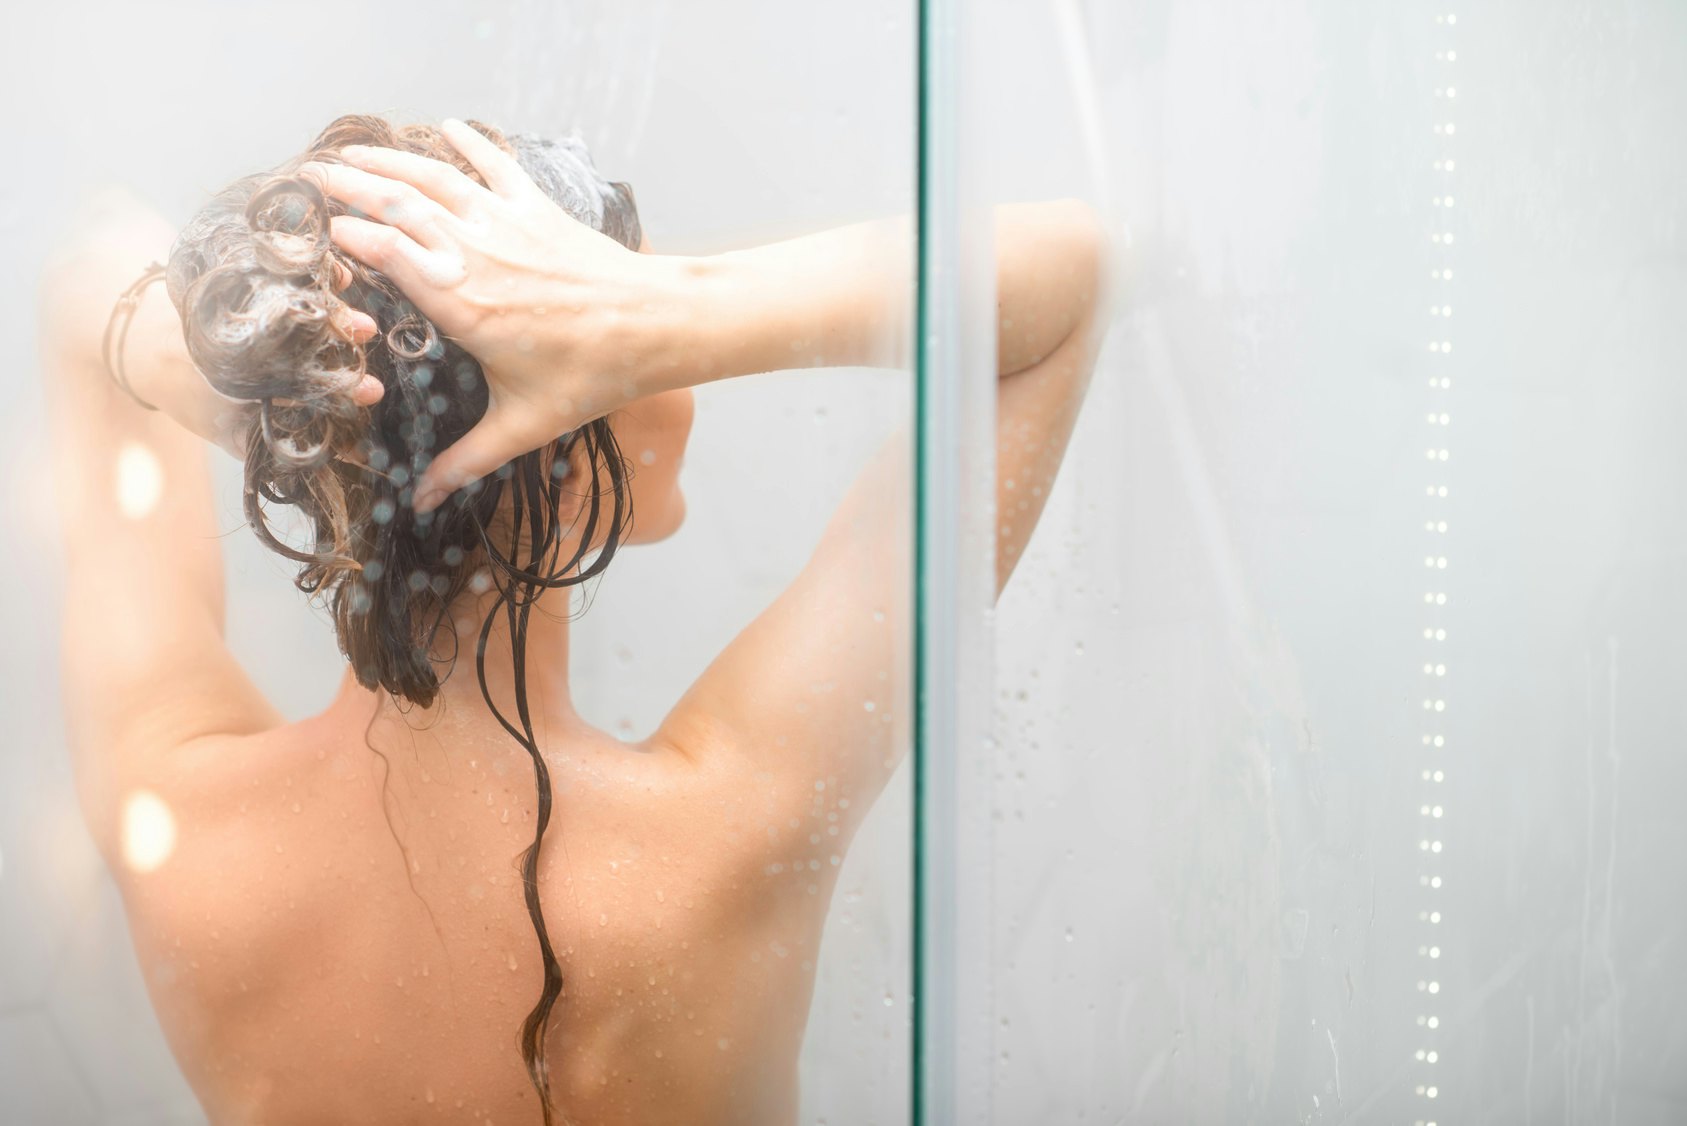 Hot Girl Taking A Shower